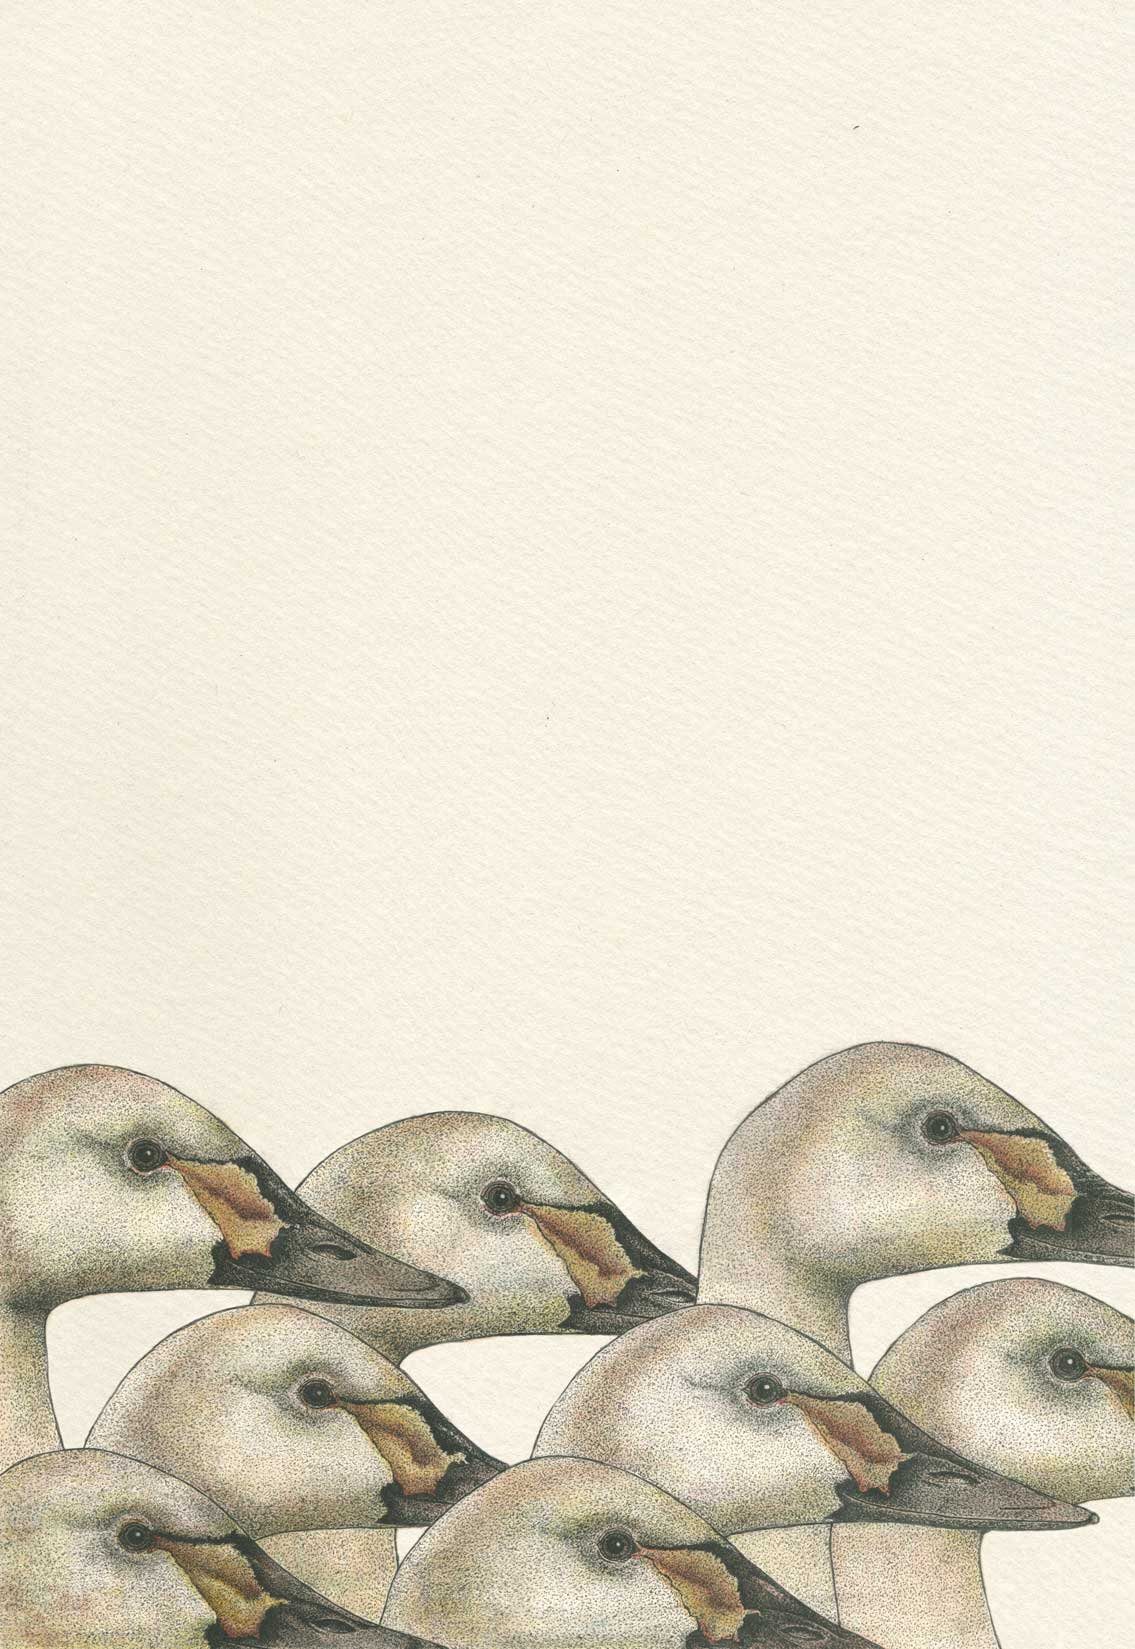 birds-Tundra-swans-british-artist-Anna-Vialle-negative-space-ink-watercolour-walnut-frame-contemporary-art-original-art-Yorkshire-gallery-Hope-Gallery